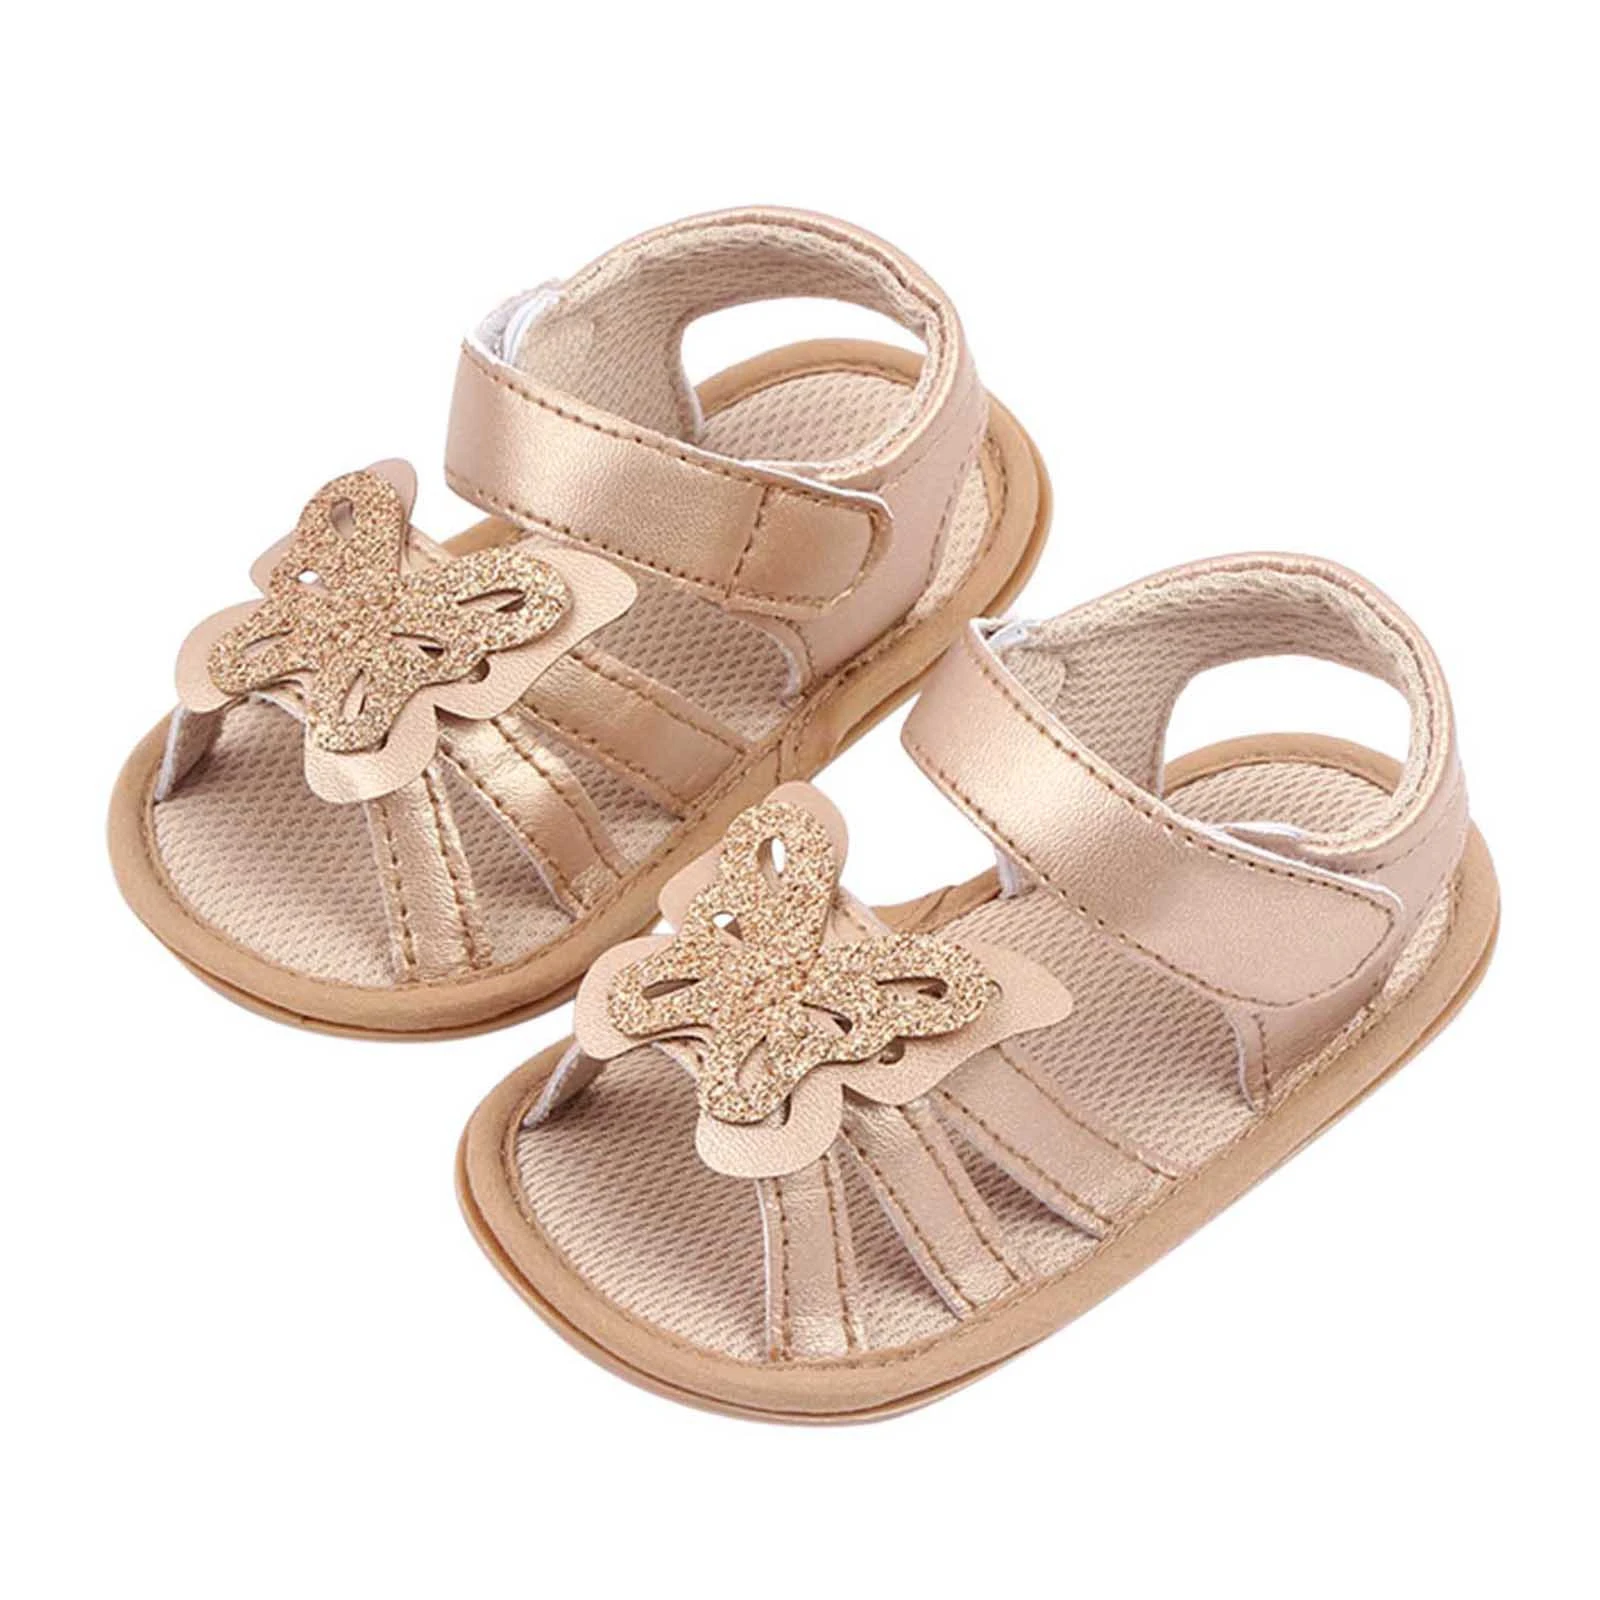 Sandalias para niñas pequeñas, primeros zapatos para niñas recién nacidas, suela suave para interiores, sandalias infantiles mariposa, zapatos de playa de verano| | AliExpress